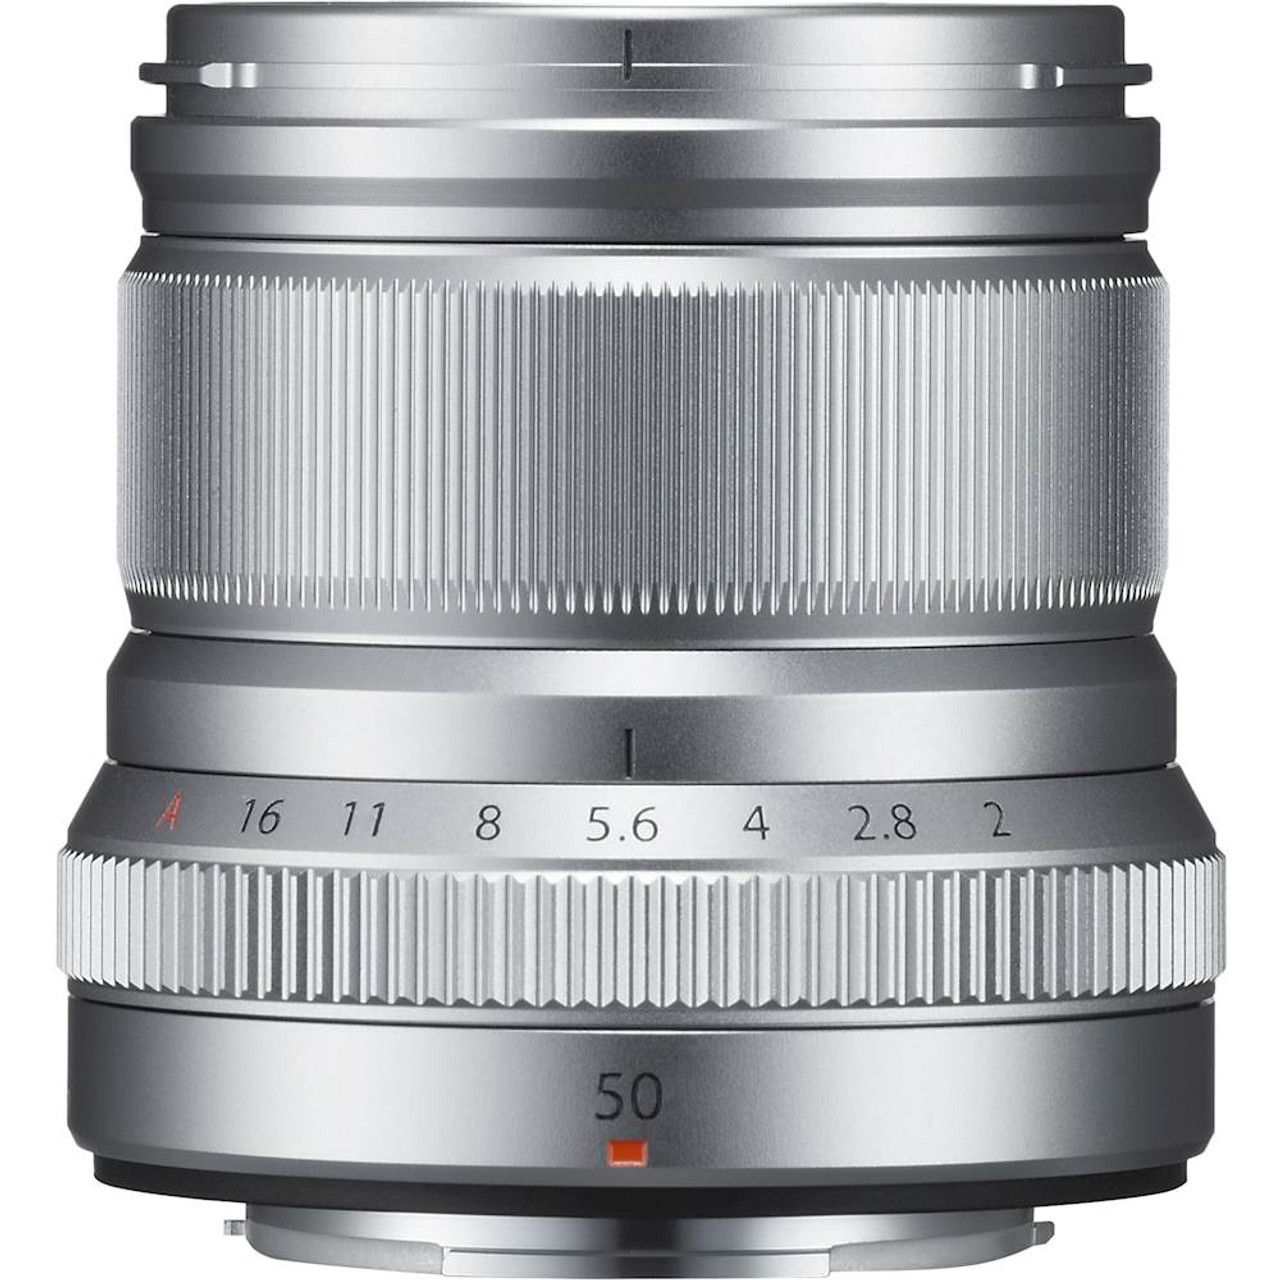 Fujifilm - Fujinon XF50mmF2 R WR Midrange Telephoto Lens for Fujifilm X-Mount System Cameras - Silver